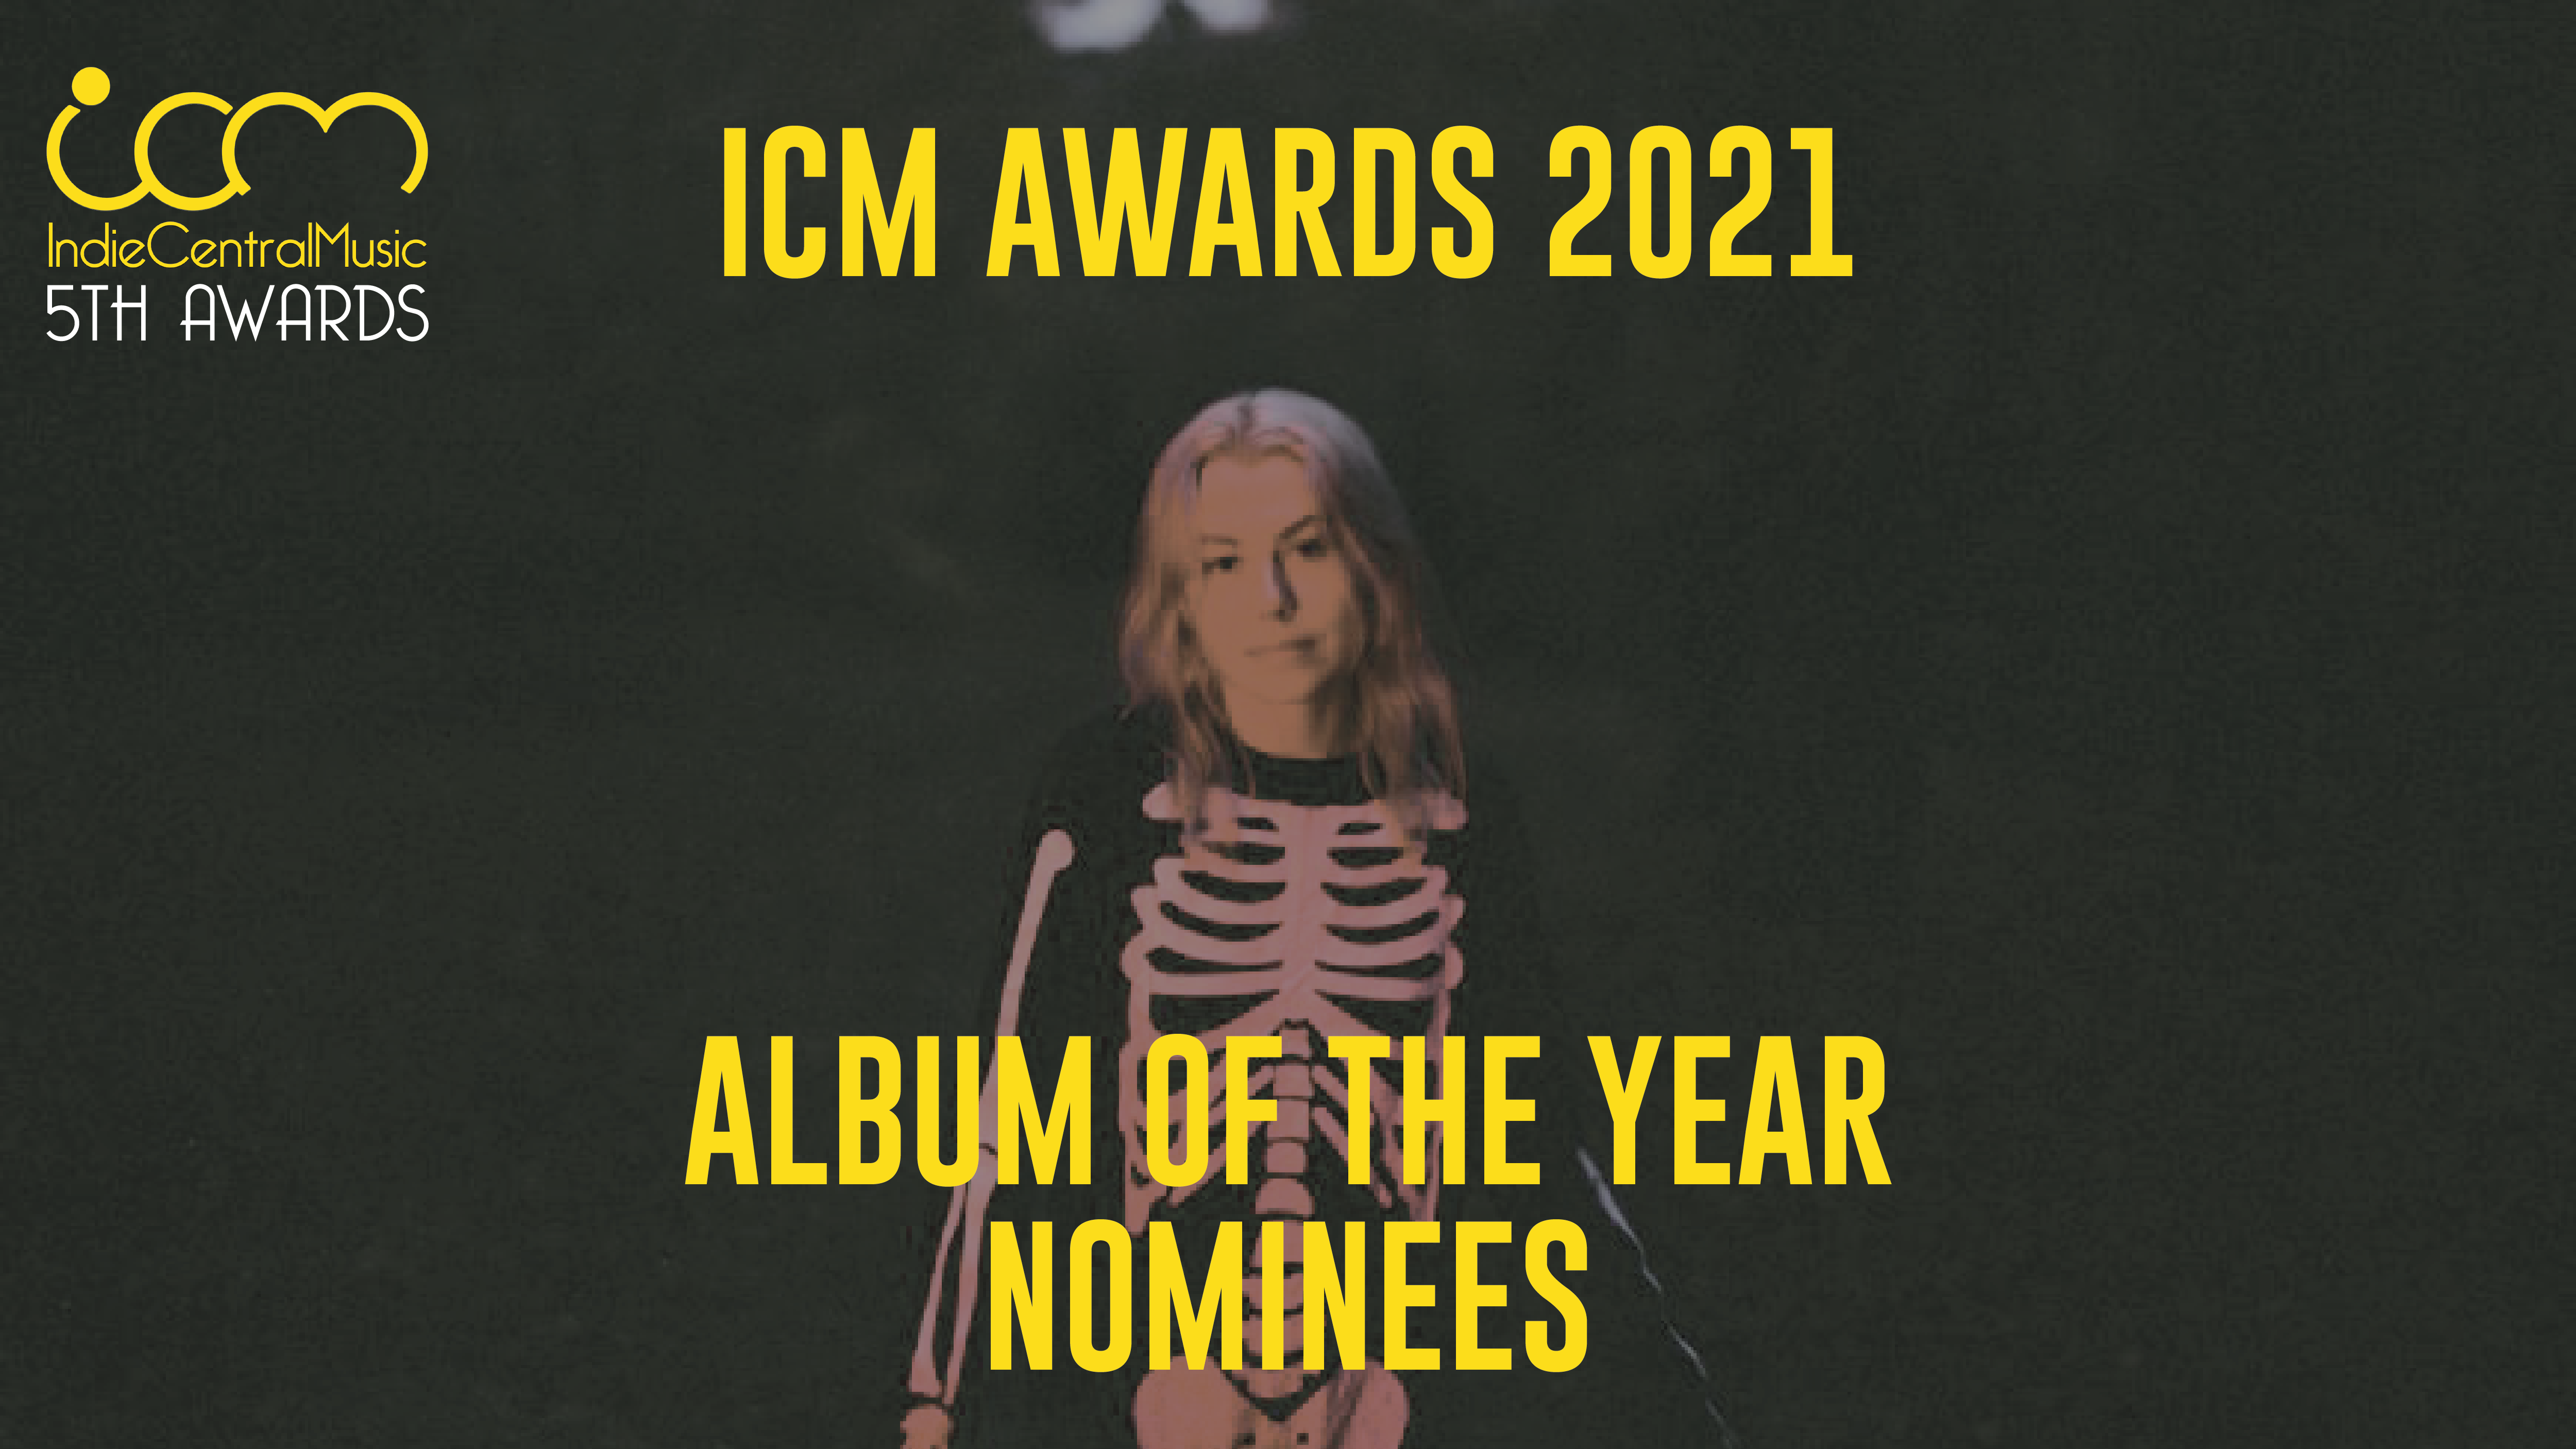 ICM Awards 2021 Album of the Year nominees IndieCentralMusic